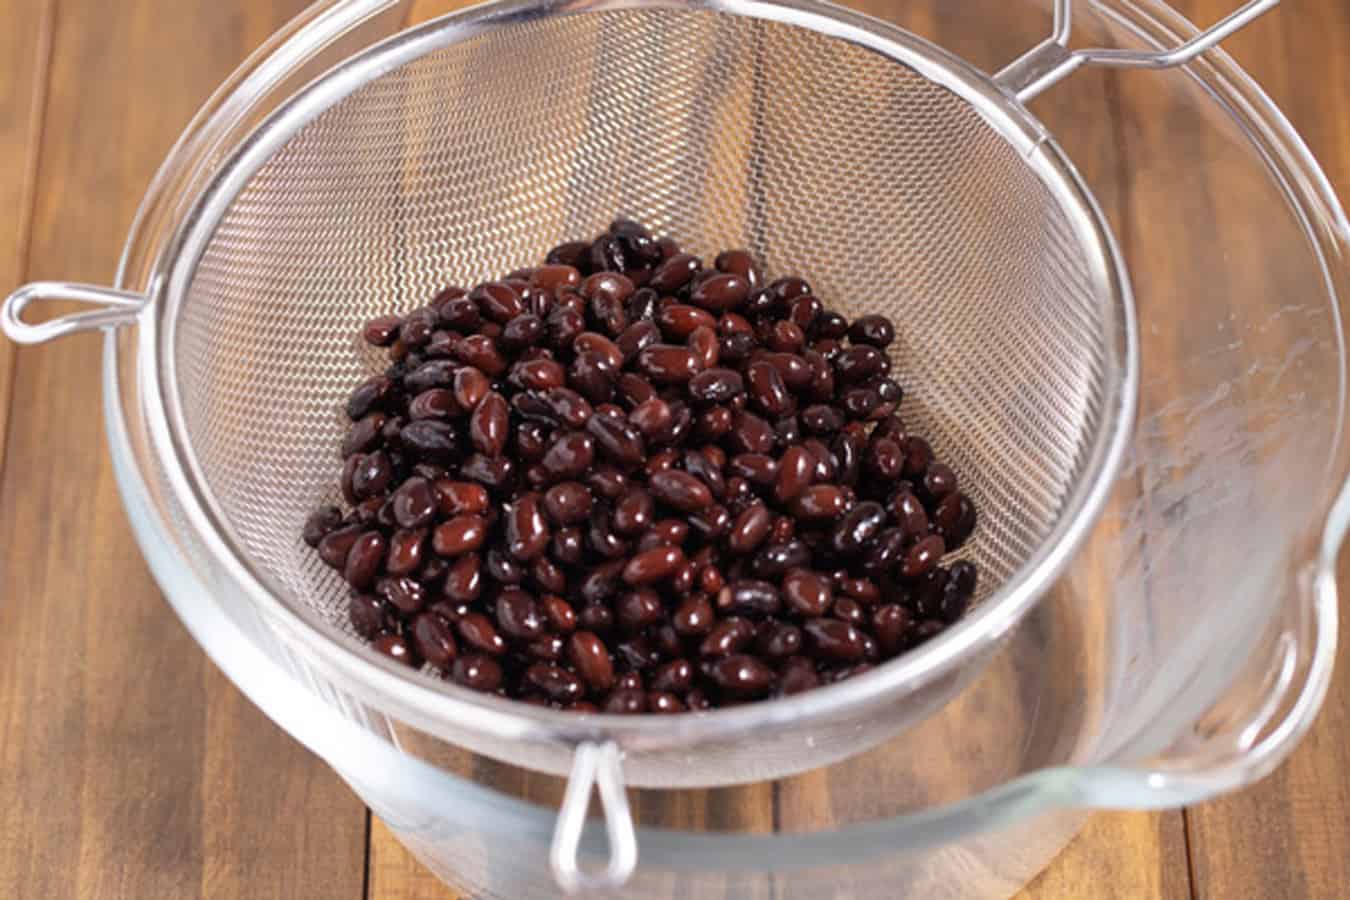 Draining black beans in colander.